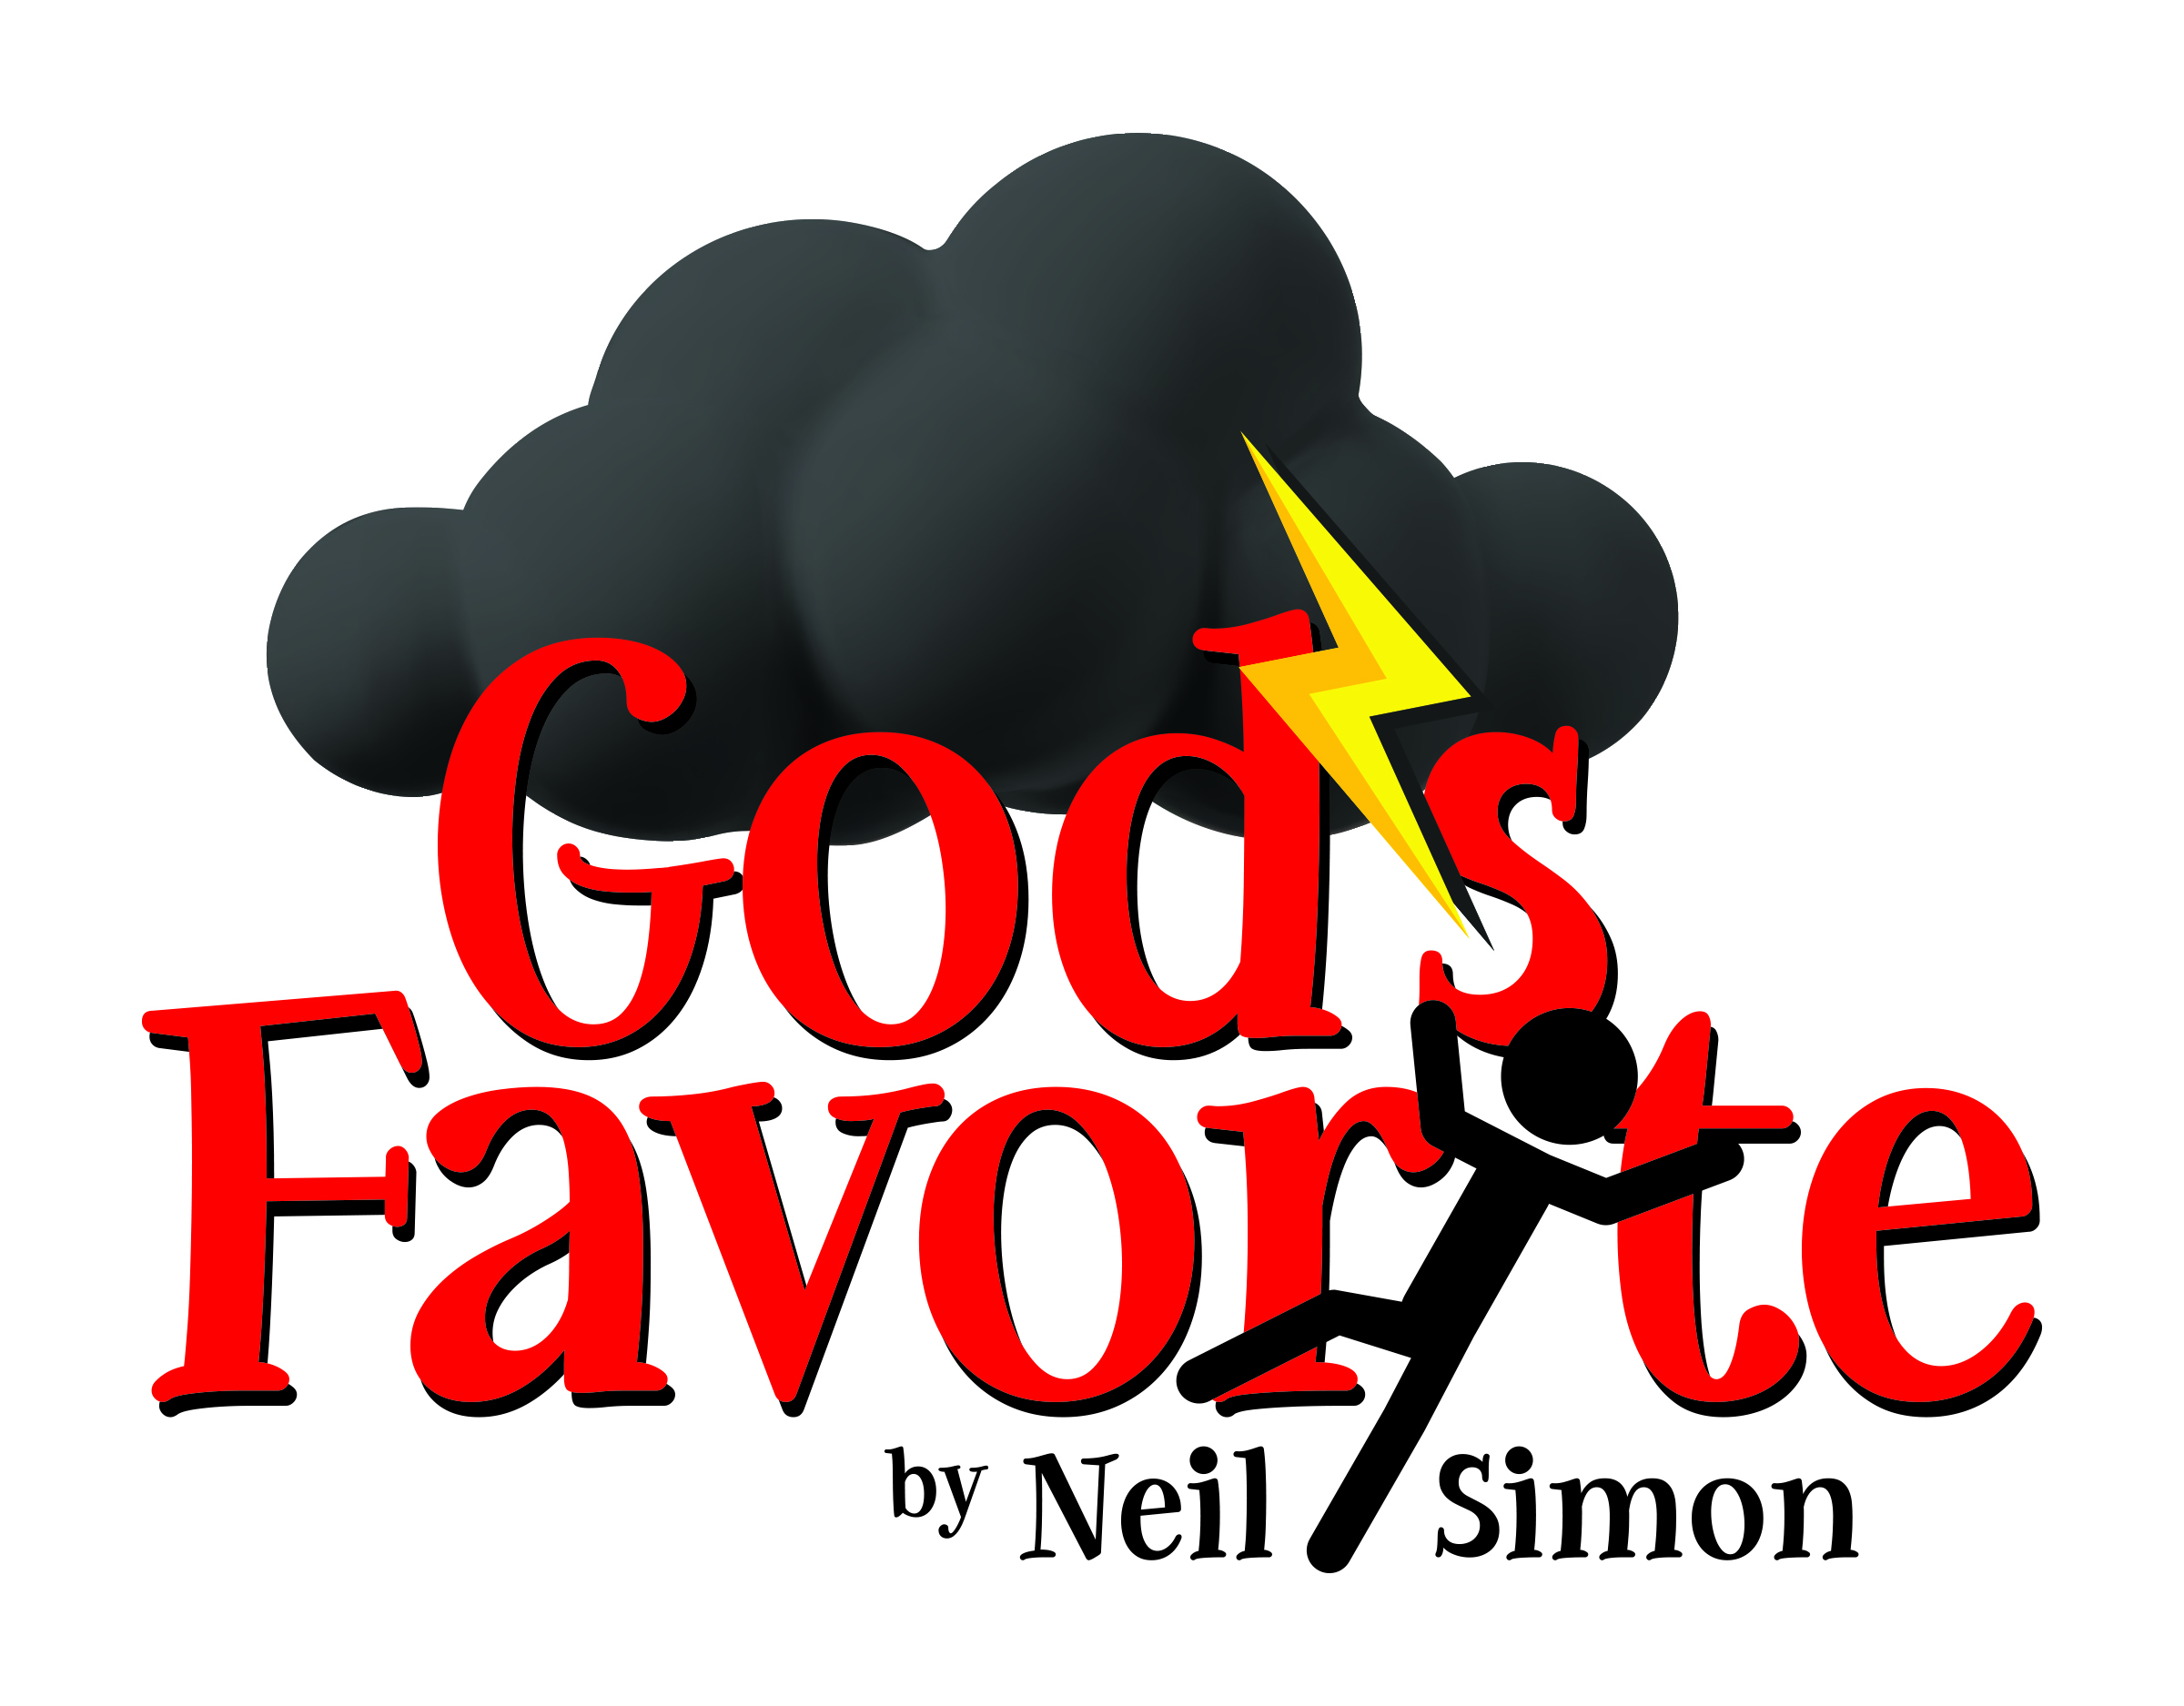 Auditions for Neil Simon’s “God’s Favorite” will be June 26-27